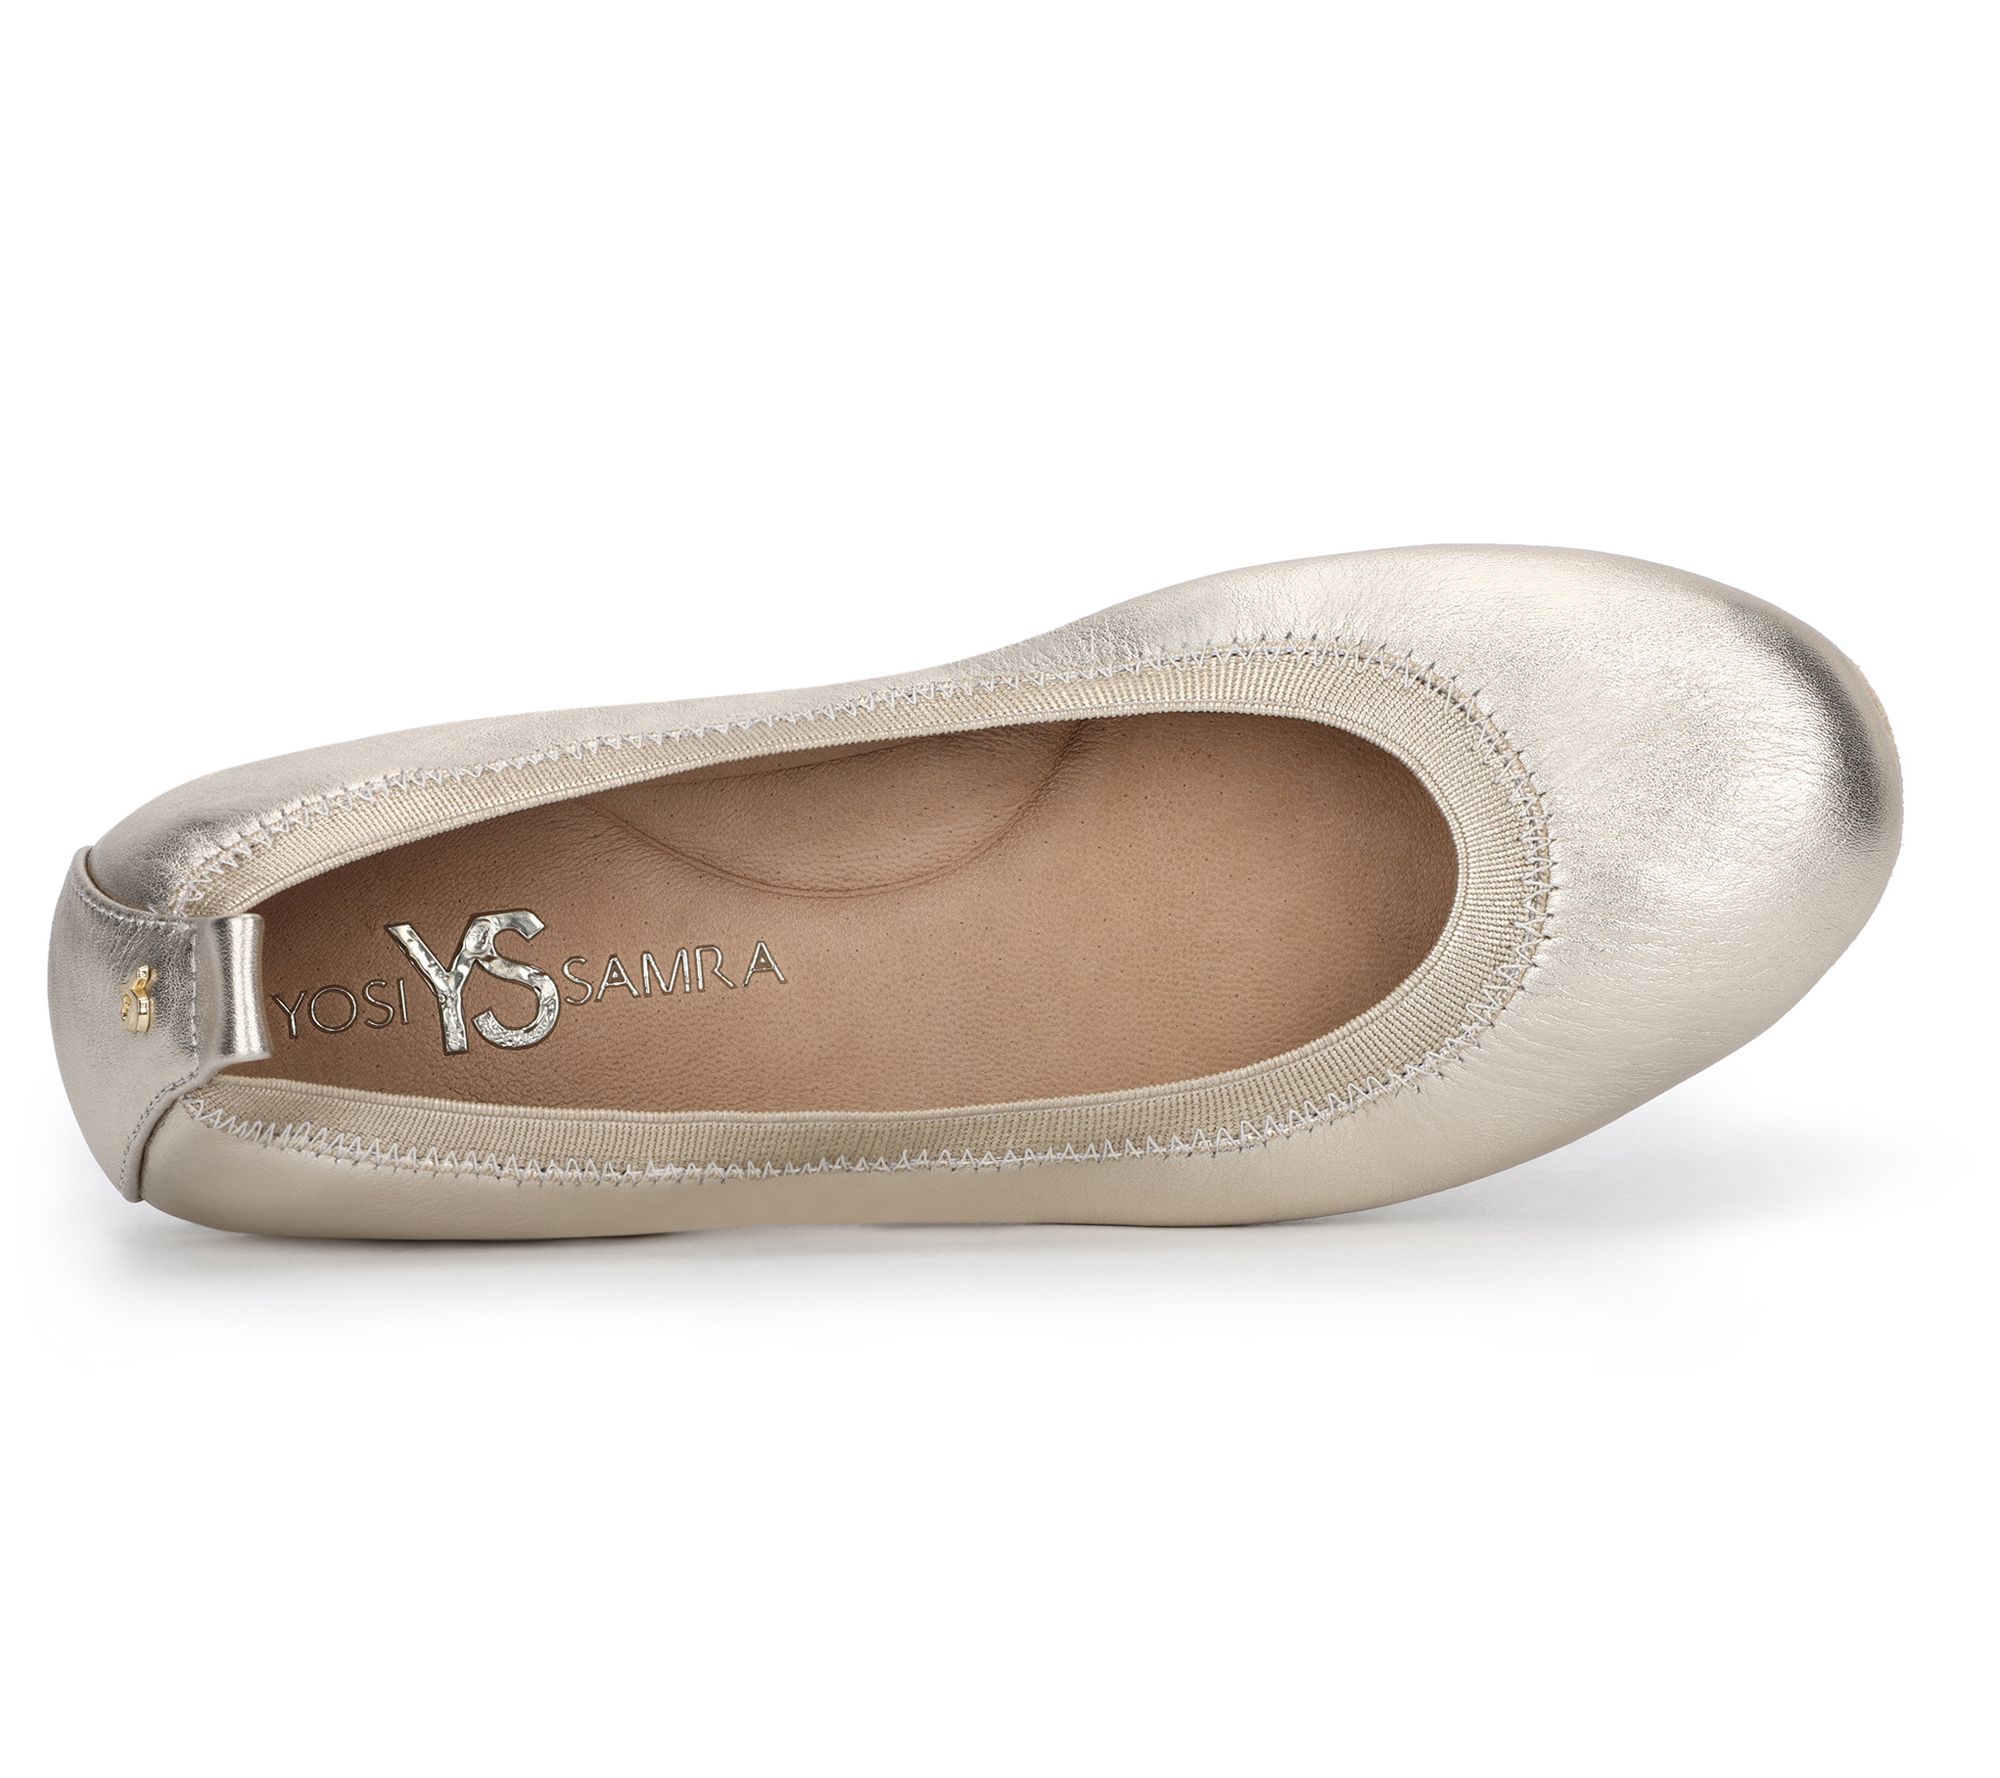 Yosi Samra Foldable Ballet Flat - Samara Metall ic Leather - QVC.com